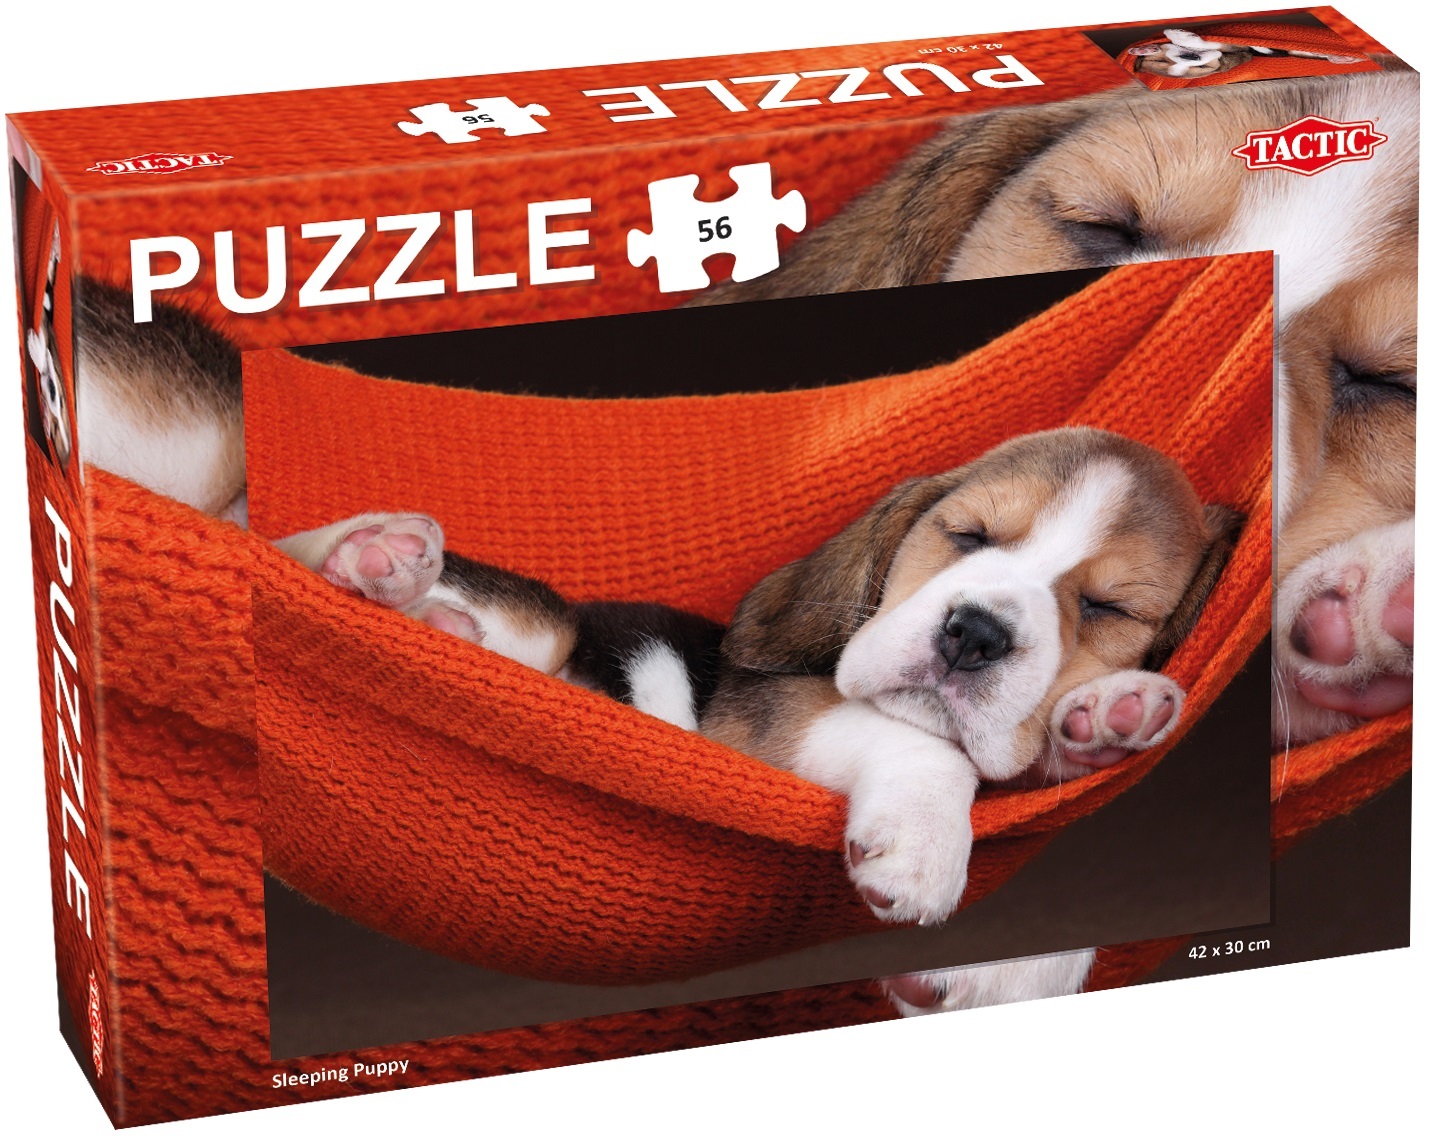 Tactic Puzzel Sleeping Puppy 56 Stukjes